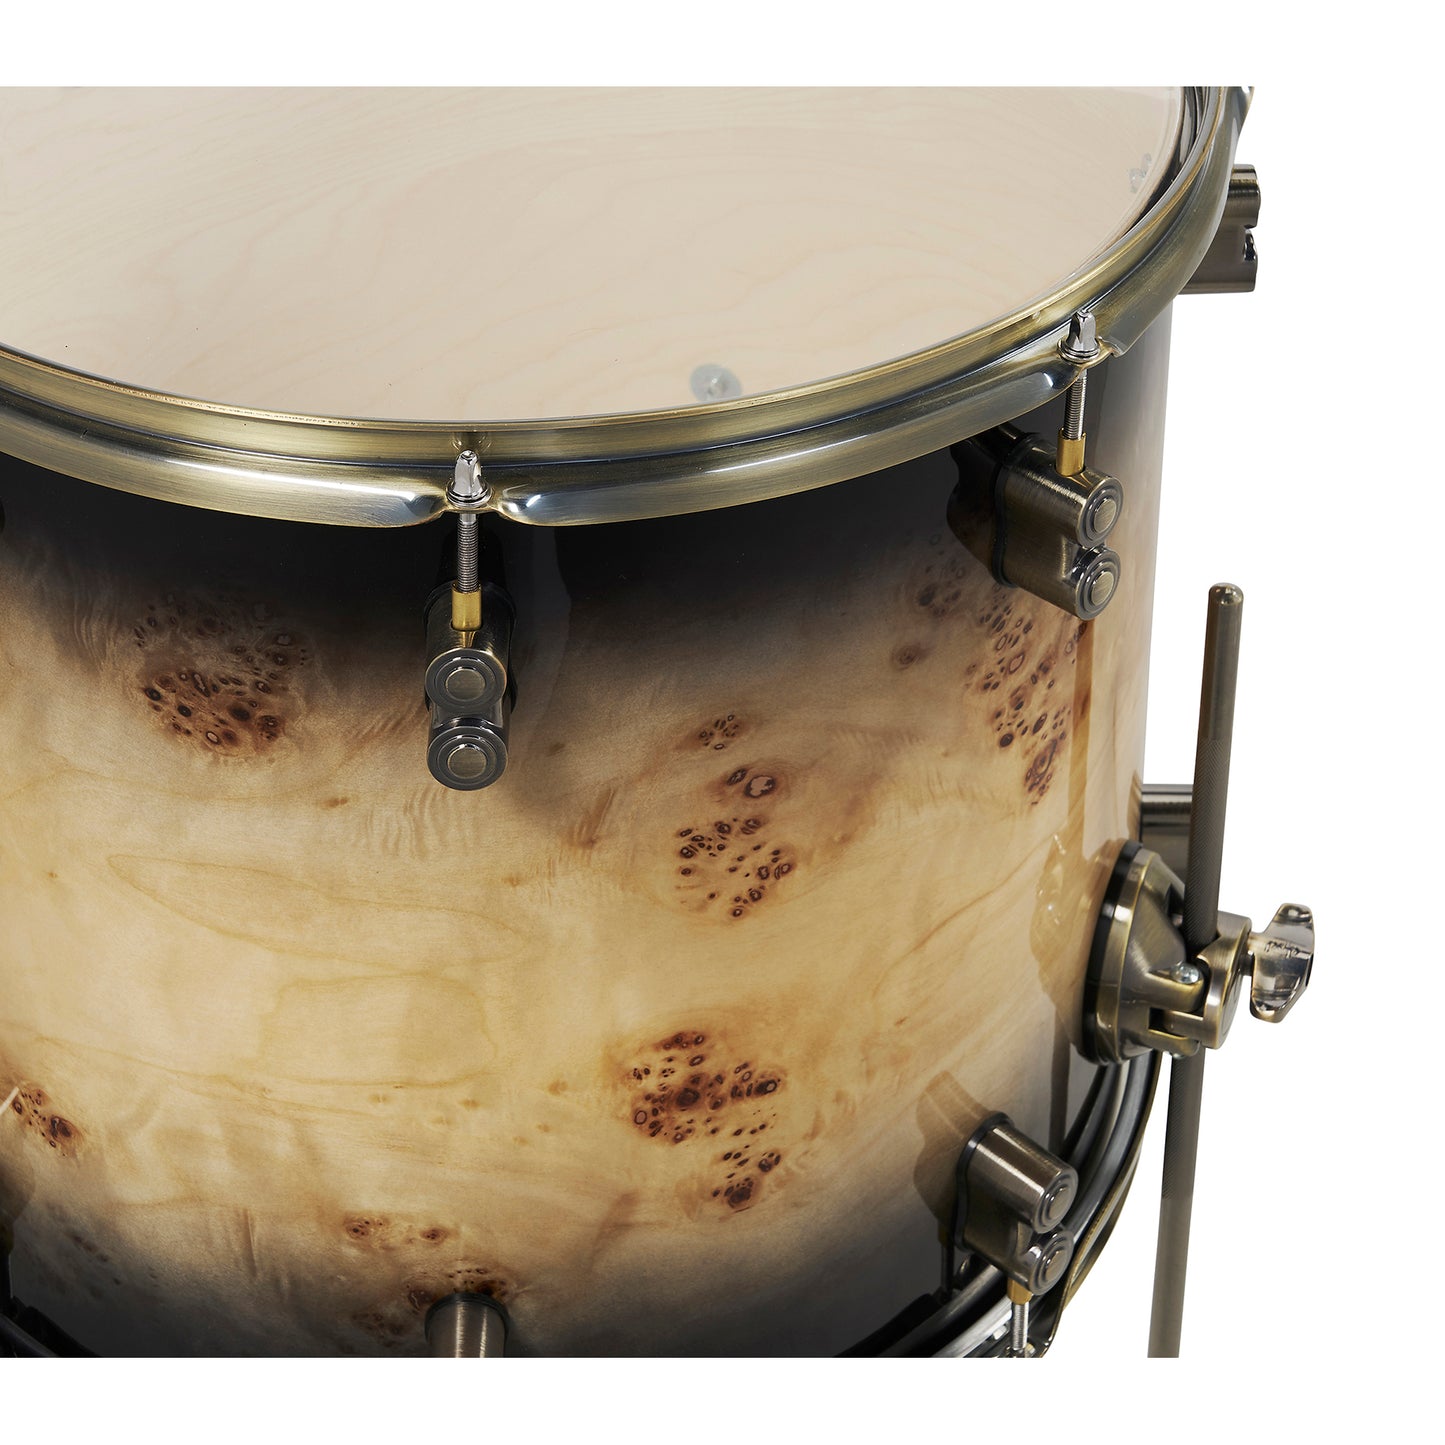 Pacific Drums & Percussion LTD 4-Piece Shell Kit - Mapa Burl-Black Burst Lacquer